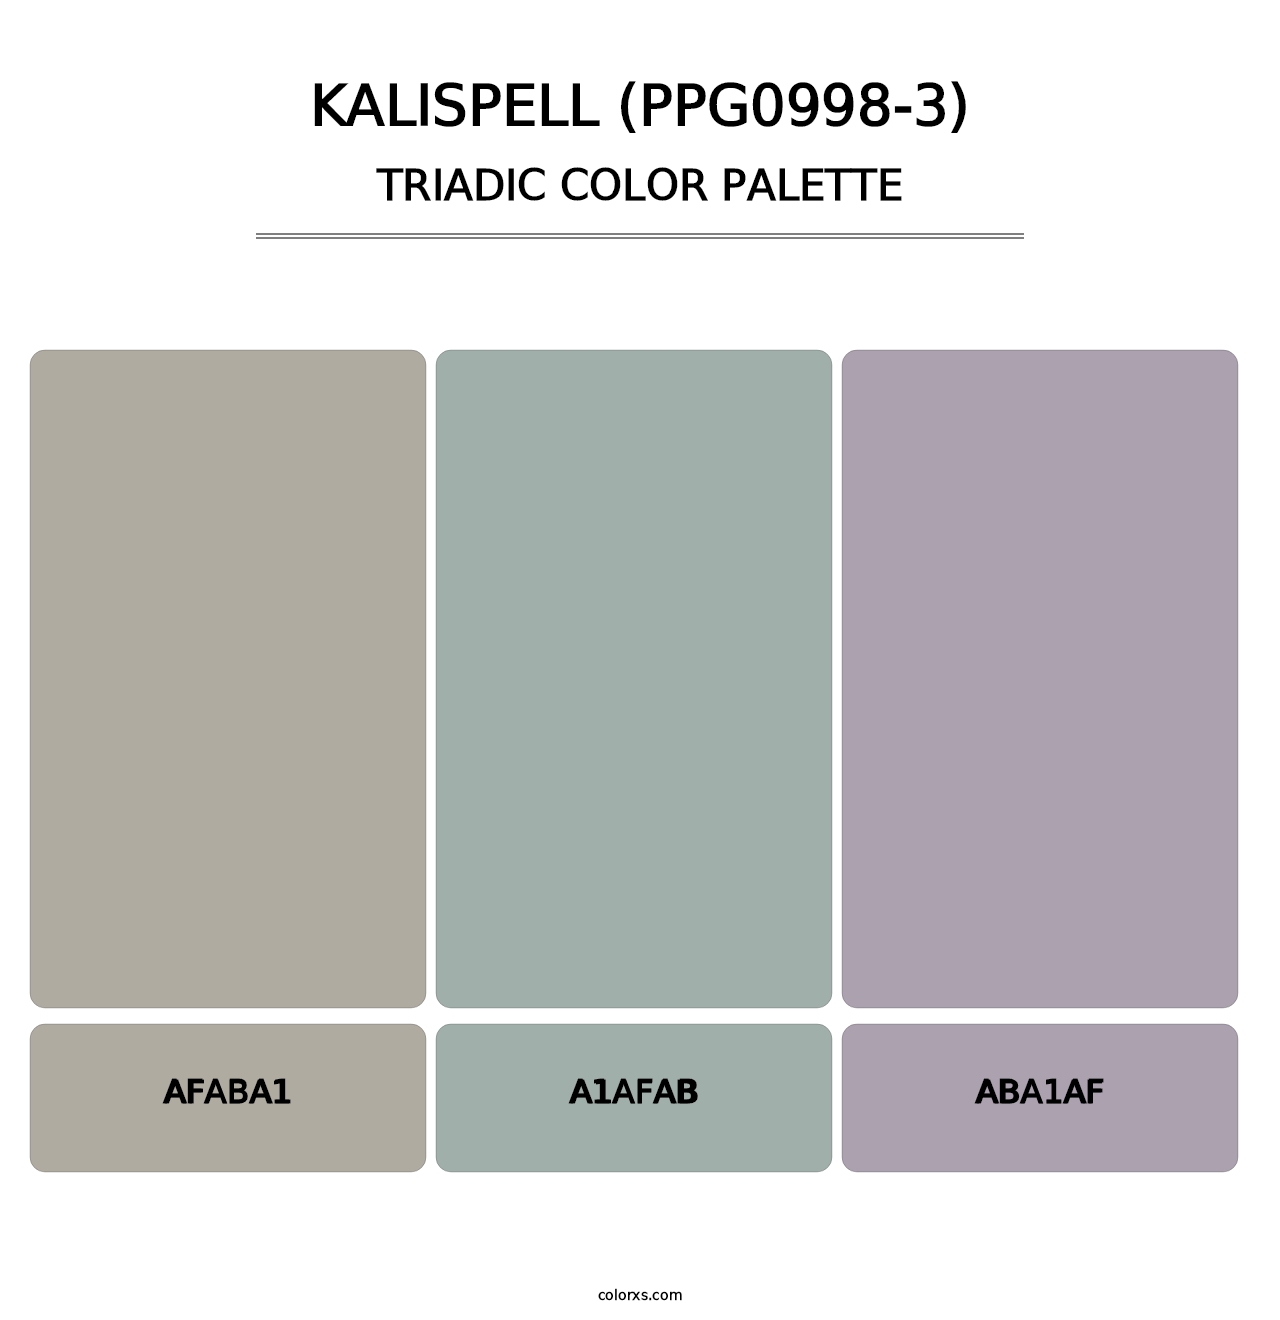 Kalispell (PPG0998-3) - Triadic Color Palette